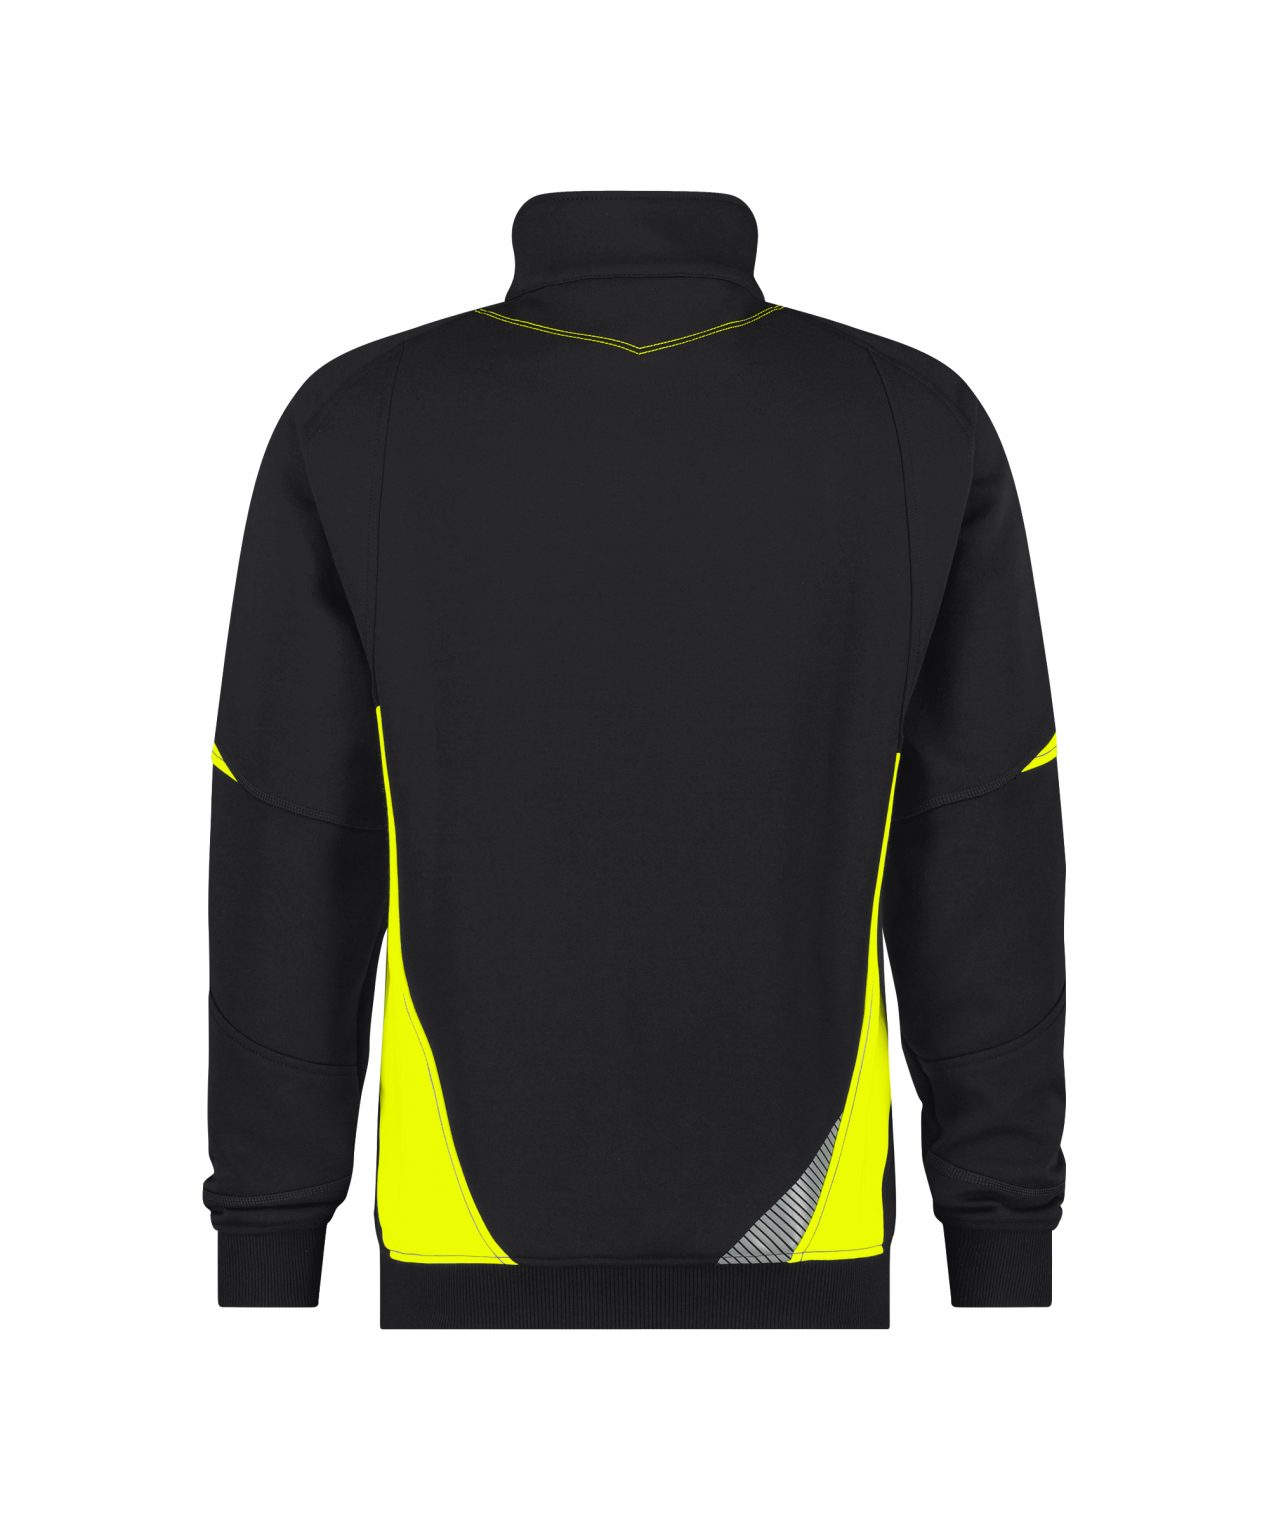 aratu sweatshirt black fluo yellow back